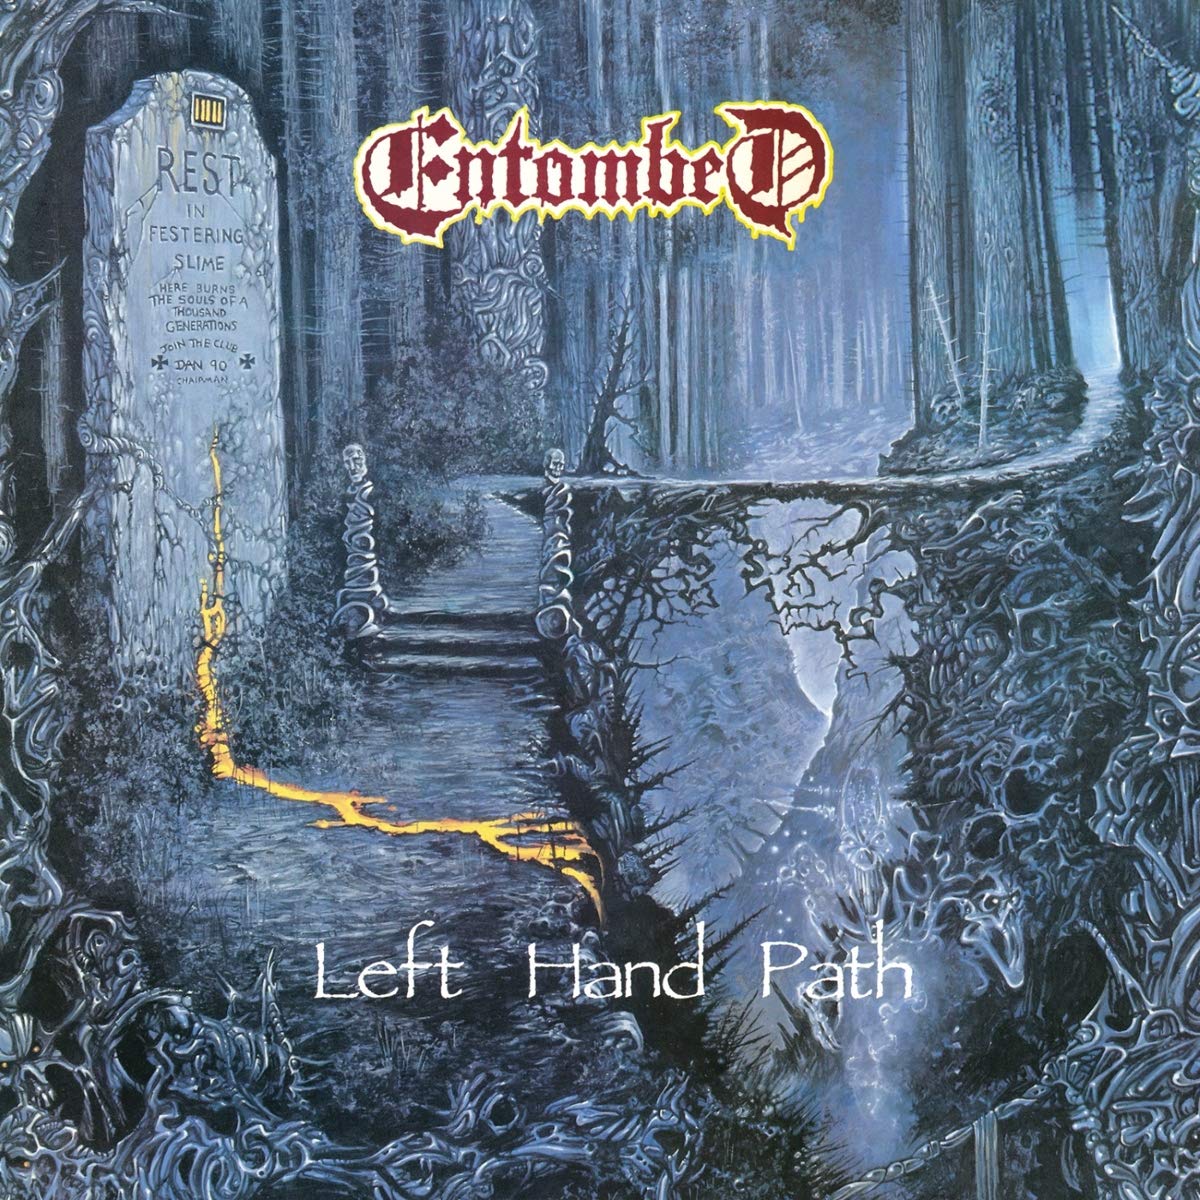 Entombed "Left Hand Path" LP